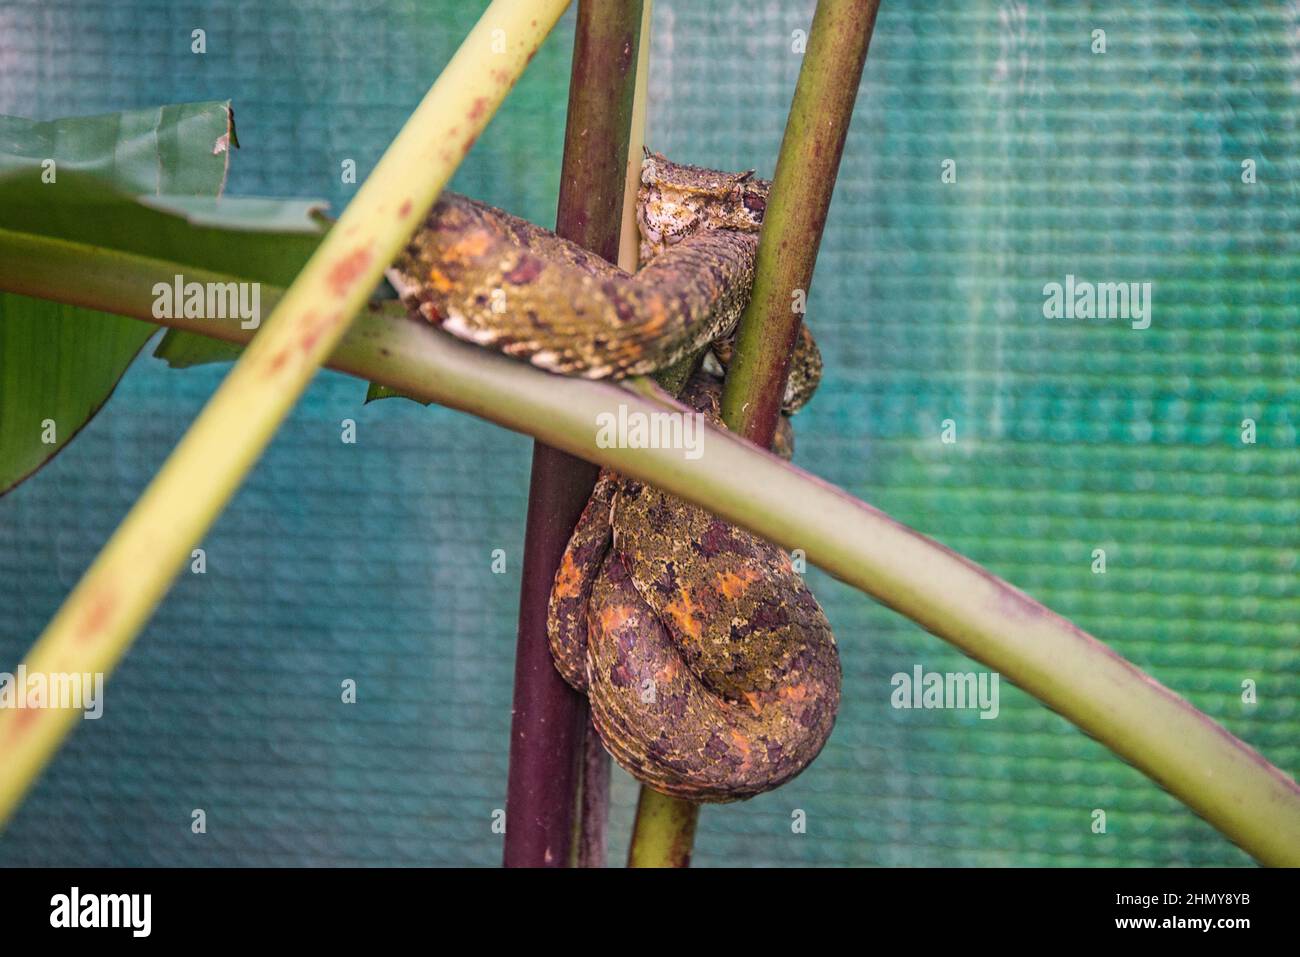 Eyelash viper (Bothriechis schlegelii), Refugio de Vida Silvestre Monteverde, Monteverde, Costa Rica Stock Photo